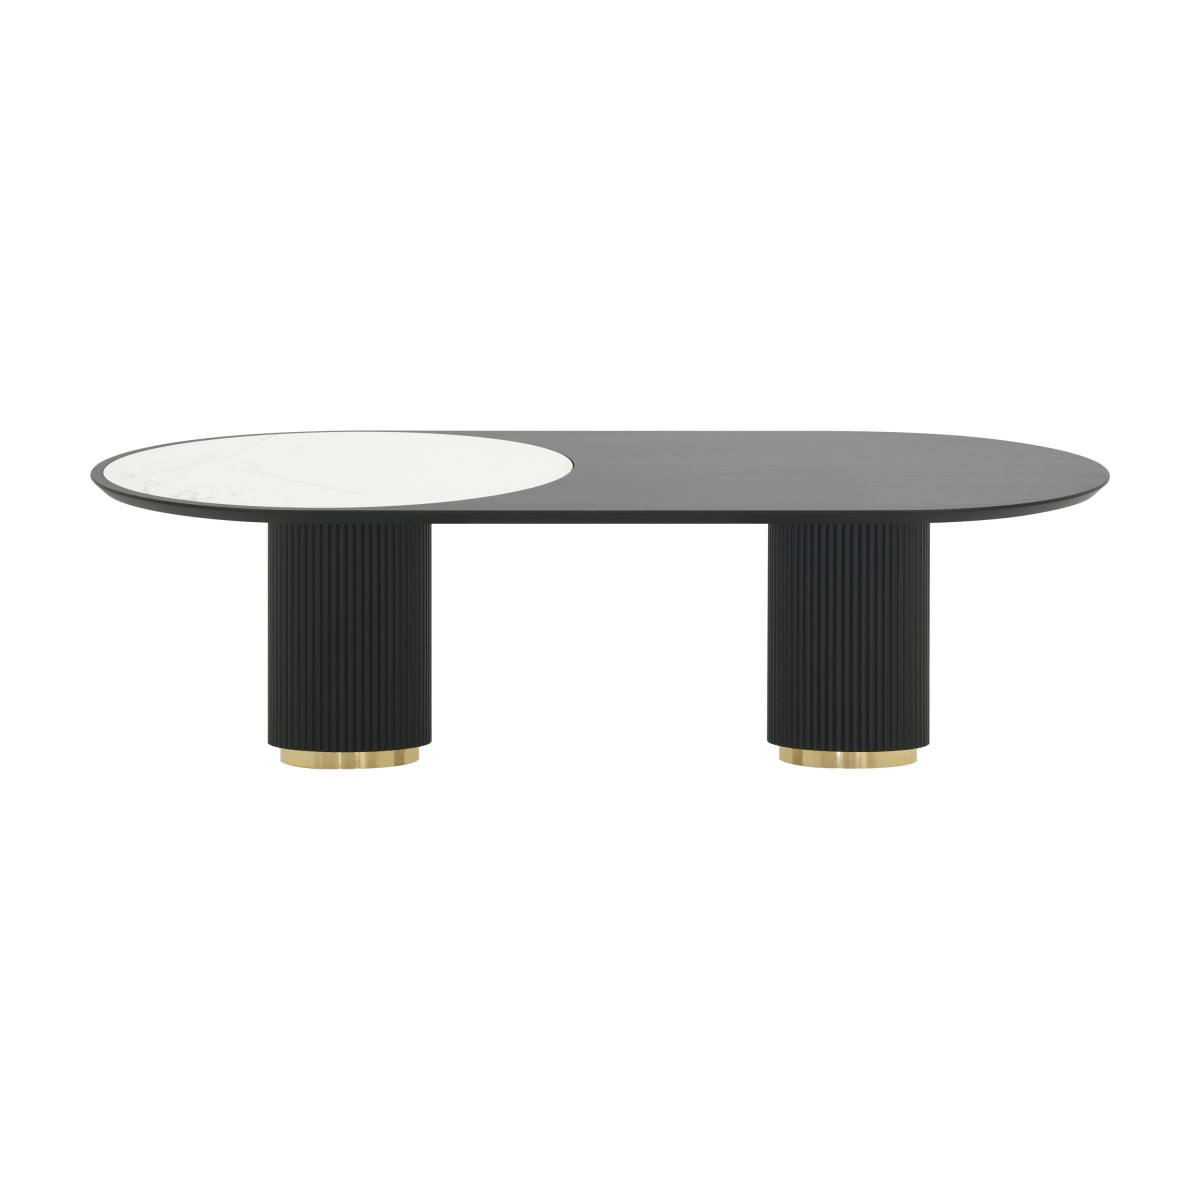 italian modern table contera b 8286